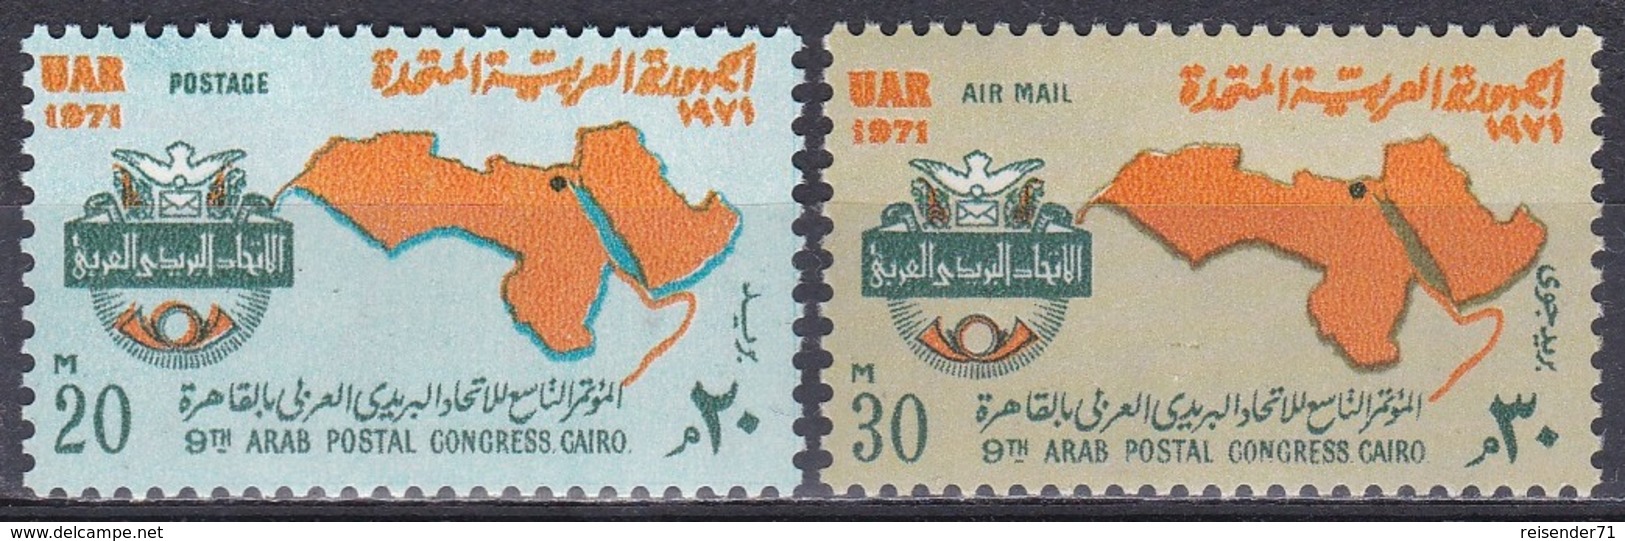 Ägypten Egypt 1971 Postwesen Arabischer Postkongress Arab Post Congress Landkarten Maps Kairo, Mi. 1030-1 ** - Ungebraucht